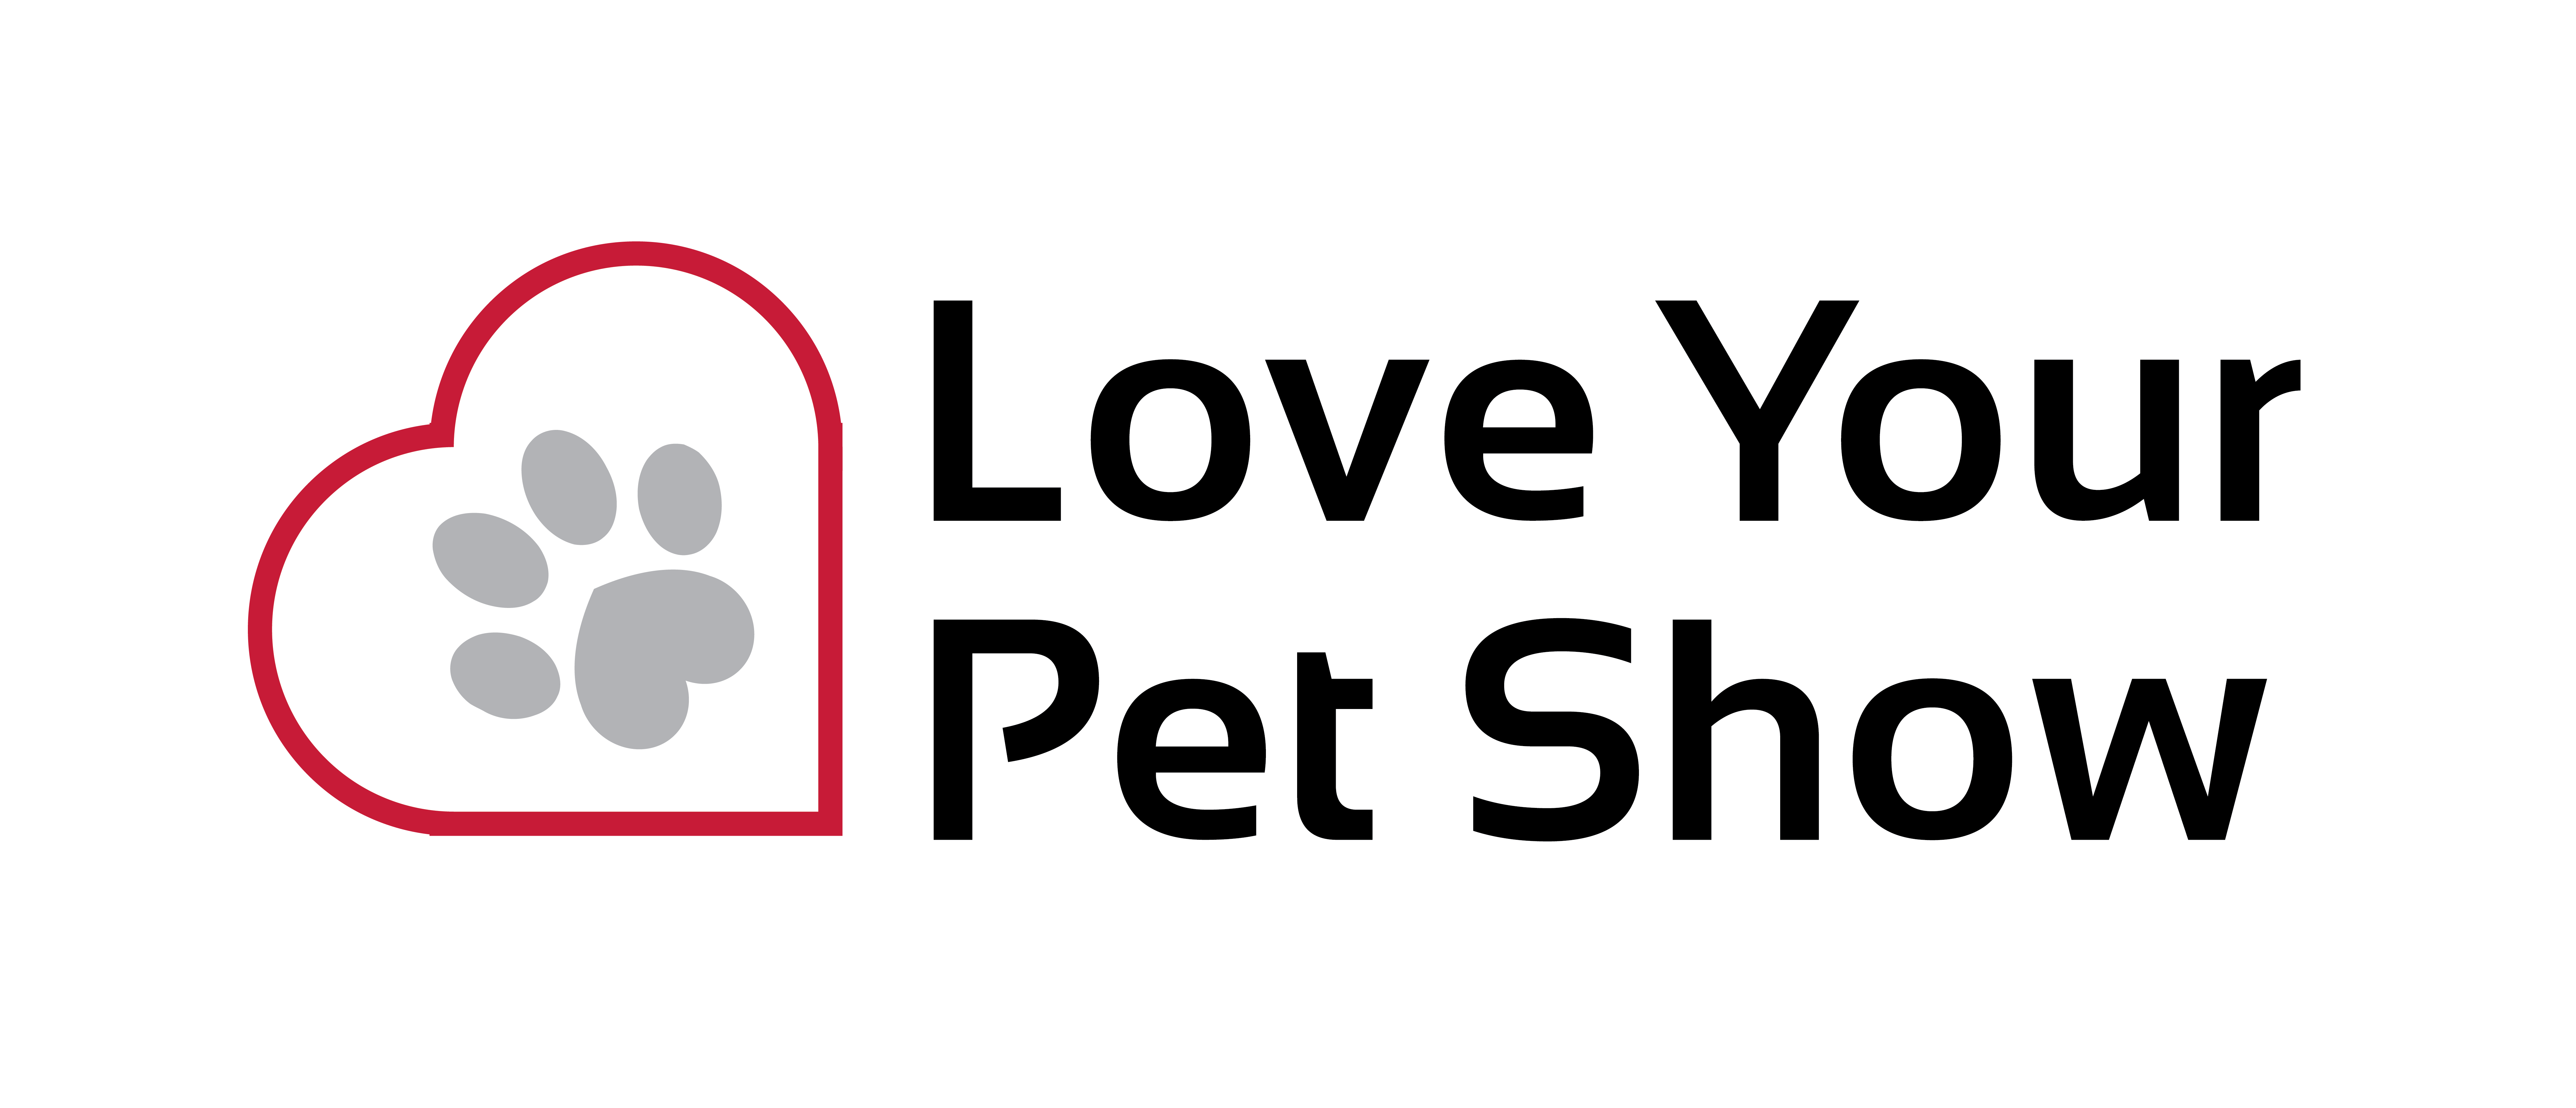  Love Your Pet Show